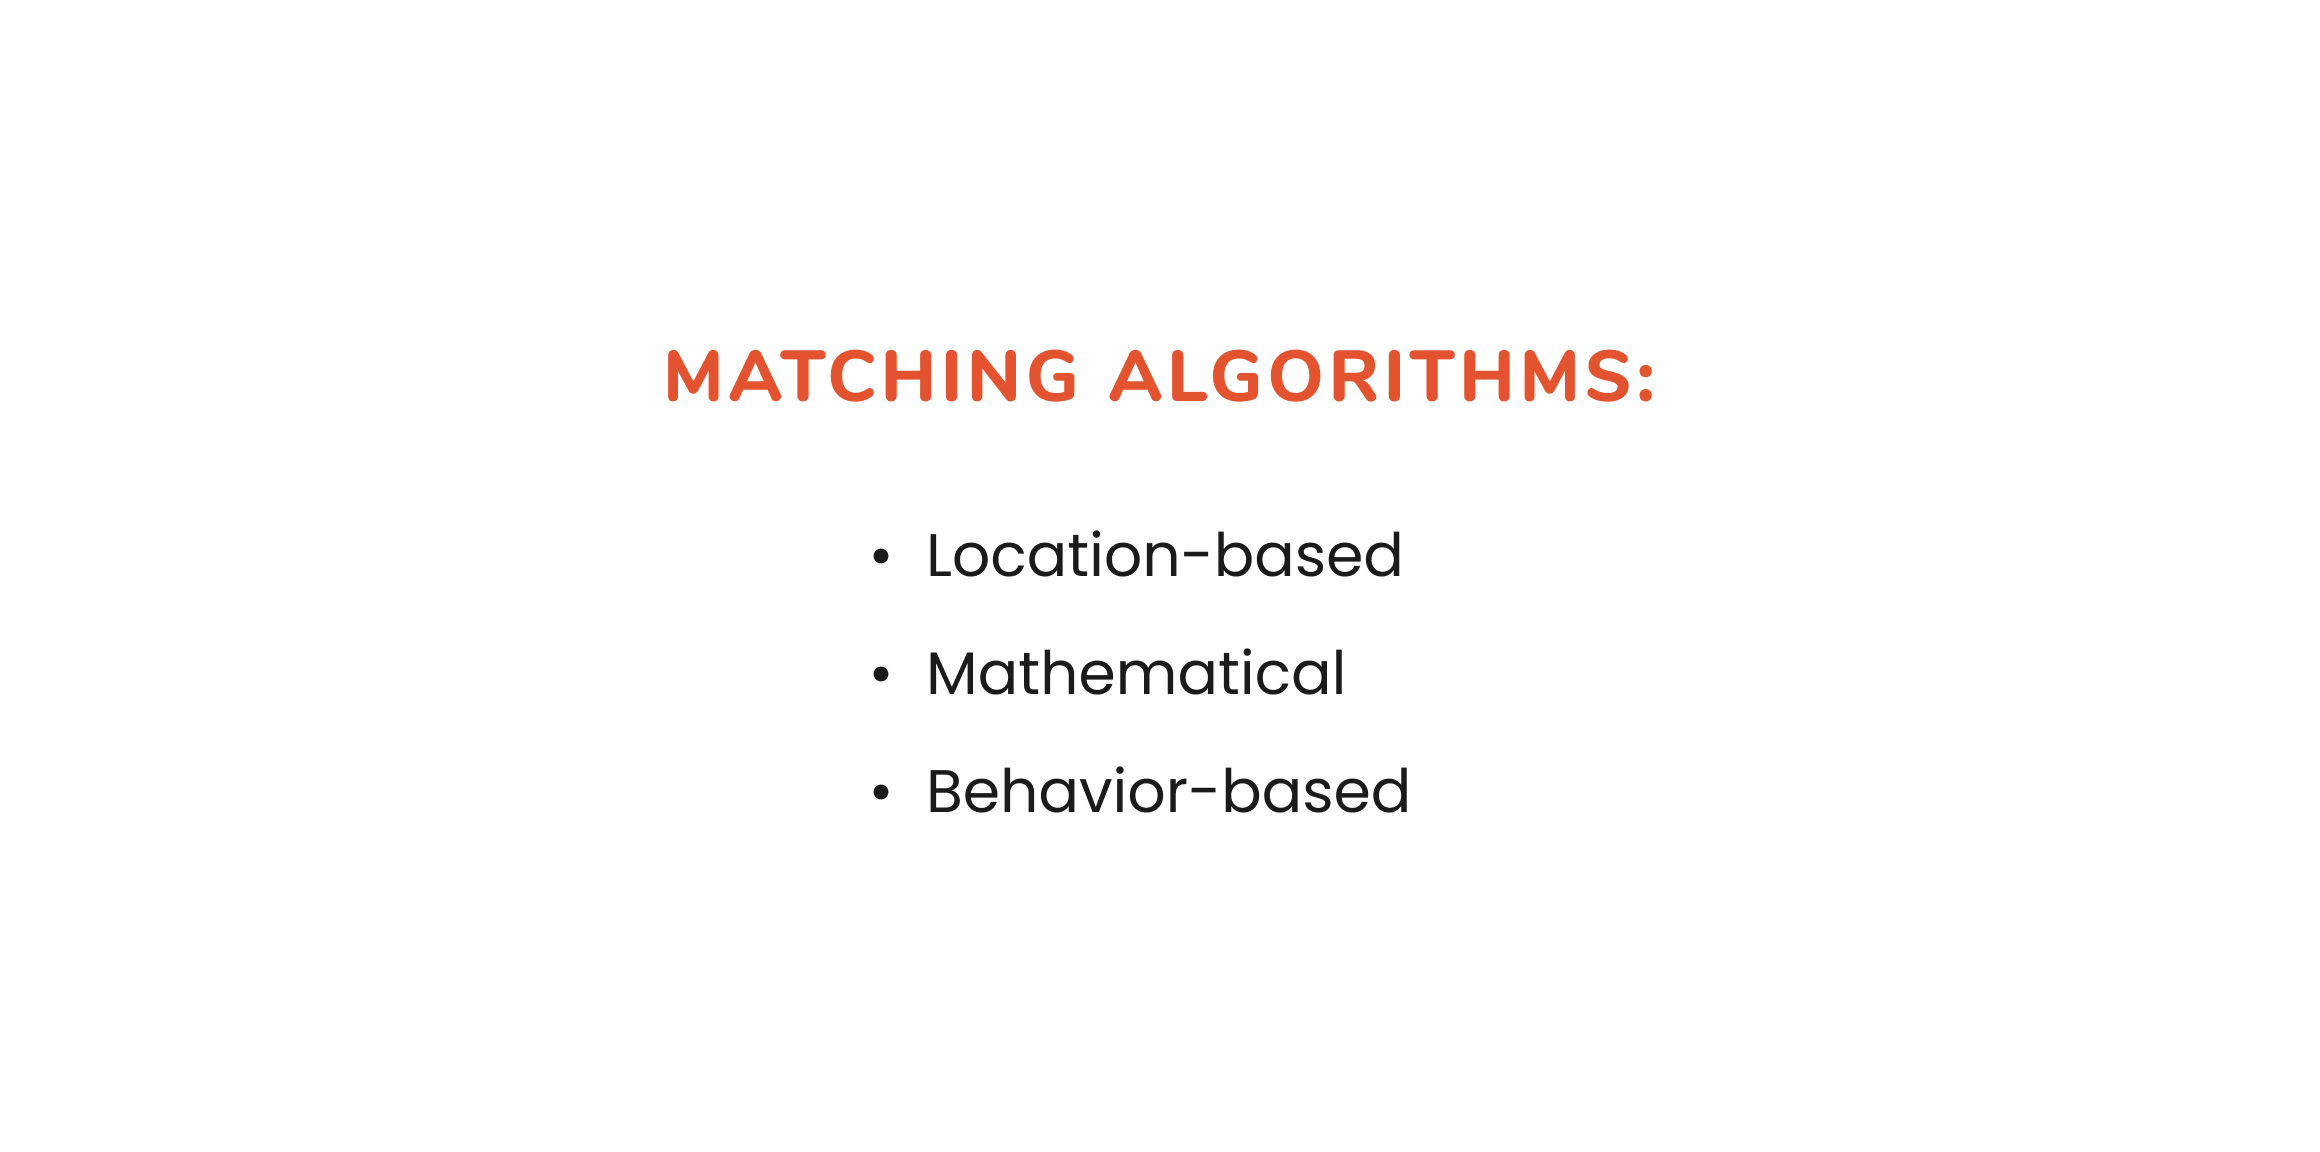 Matching algorithms